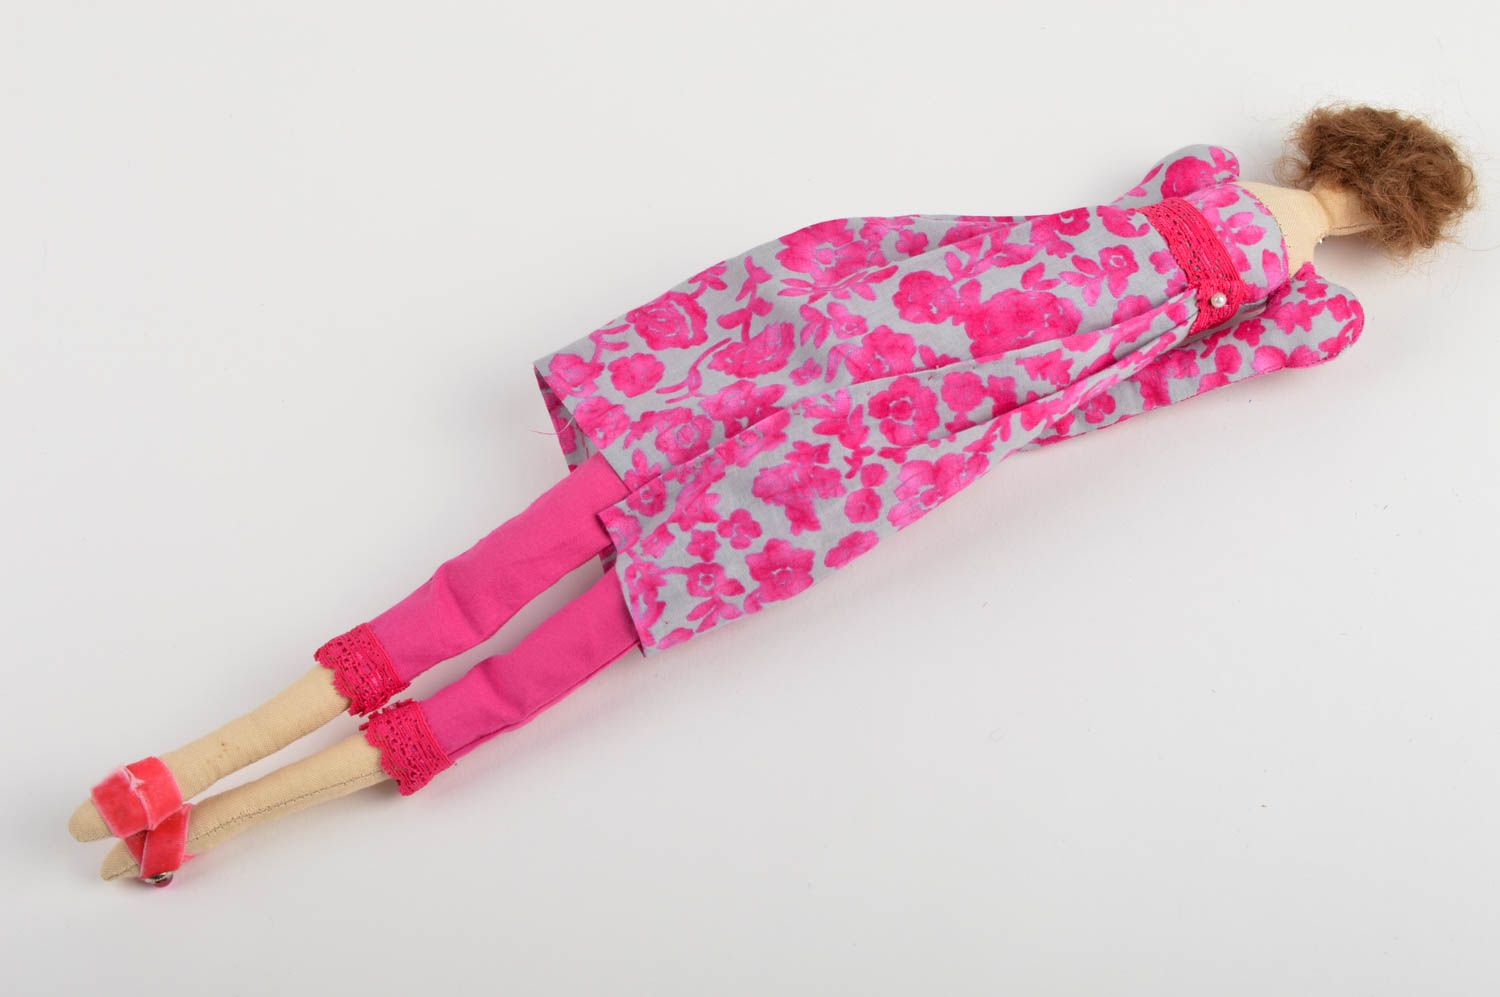 Handmade doll in pink dress stuffed toy designer childrens toy decoration ideas photo 3